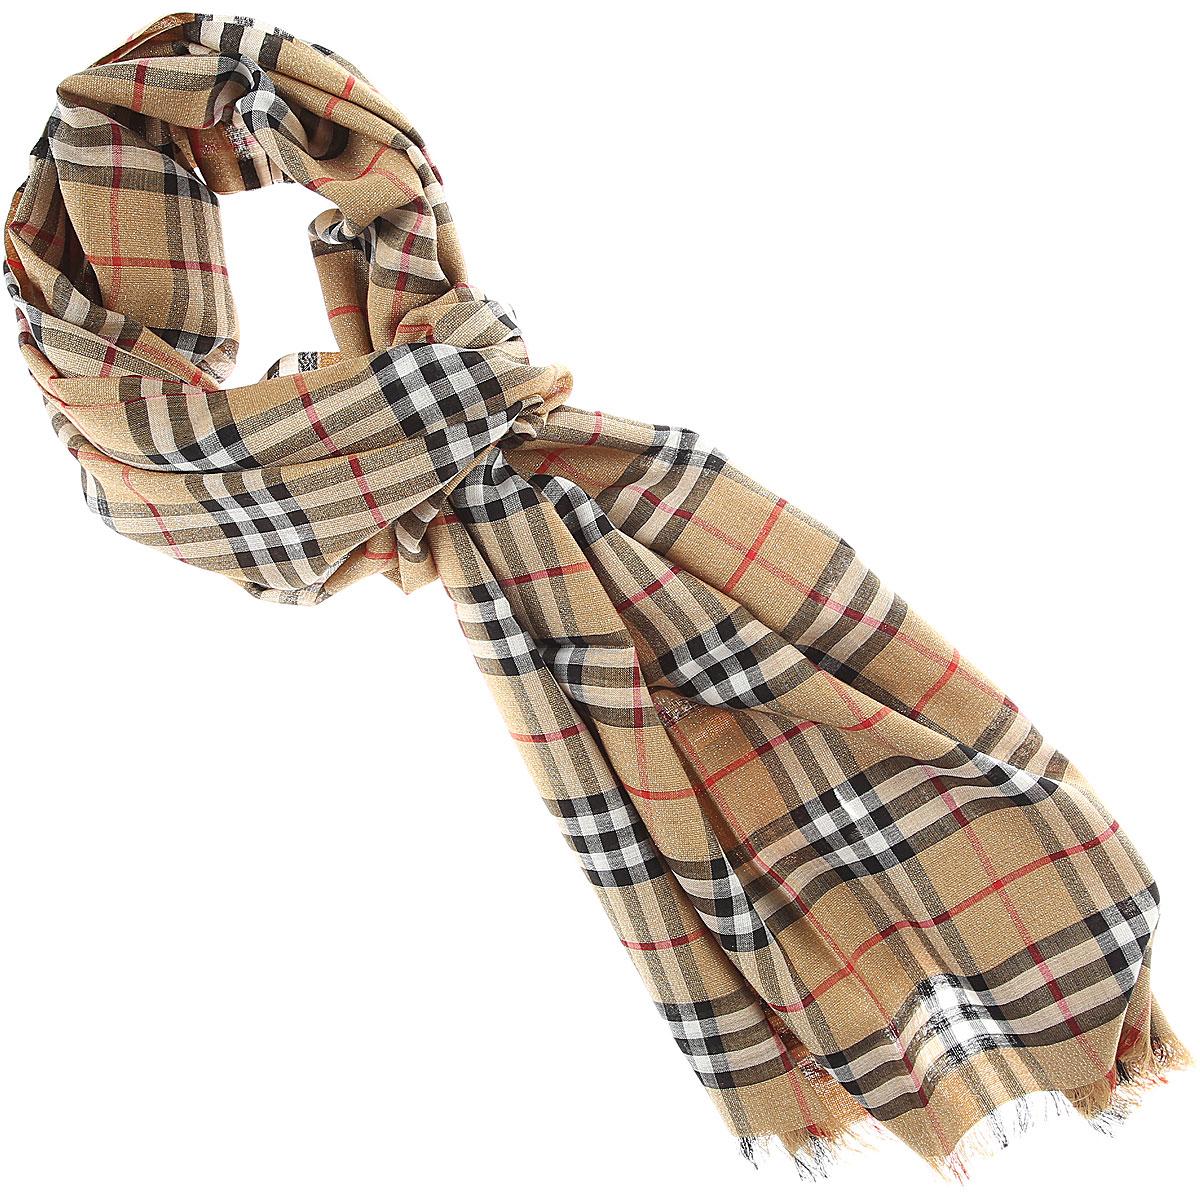 burberry scarf sale